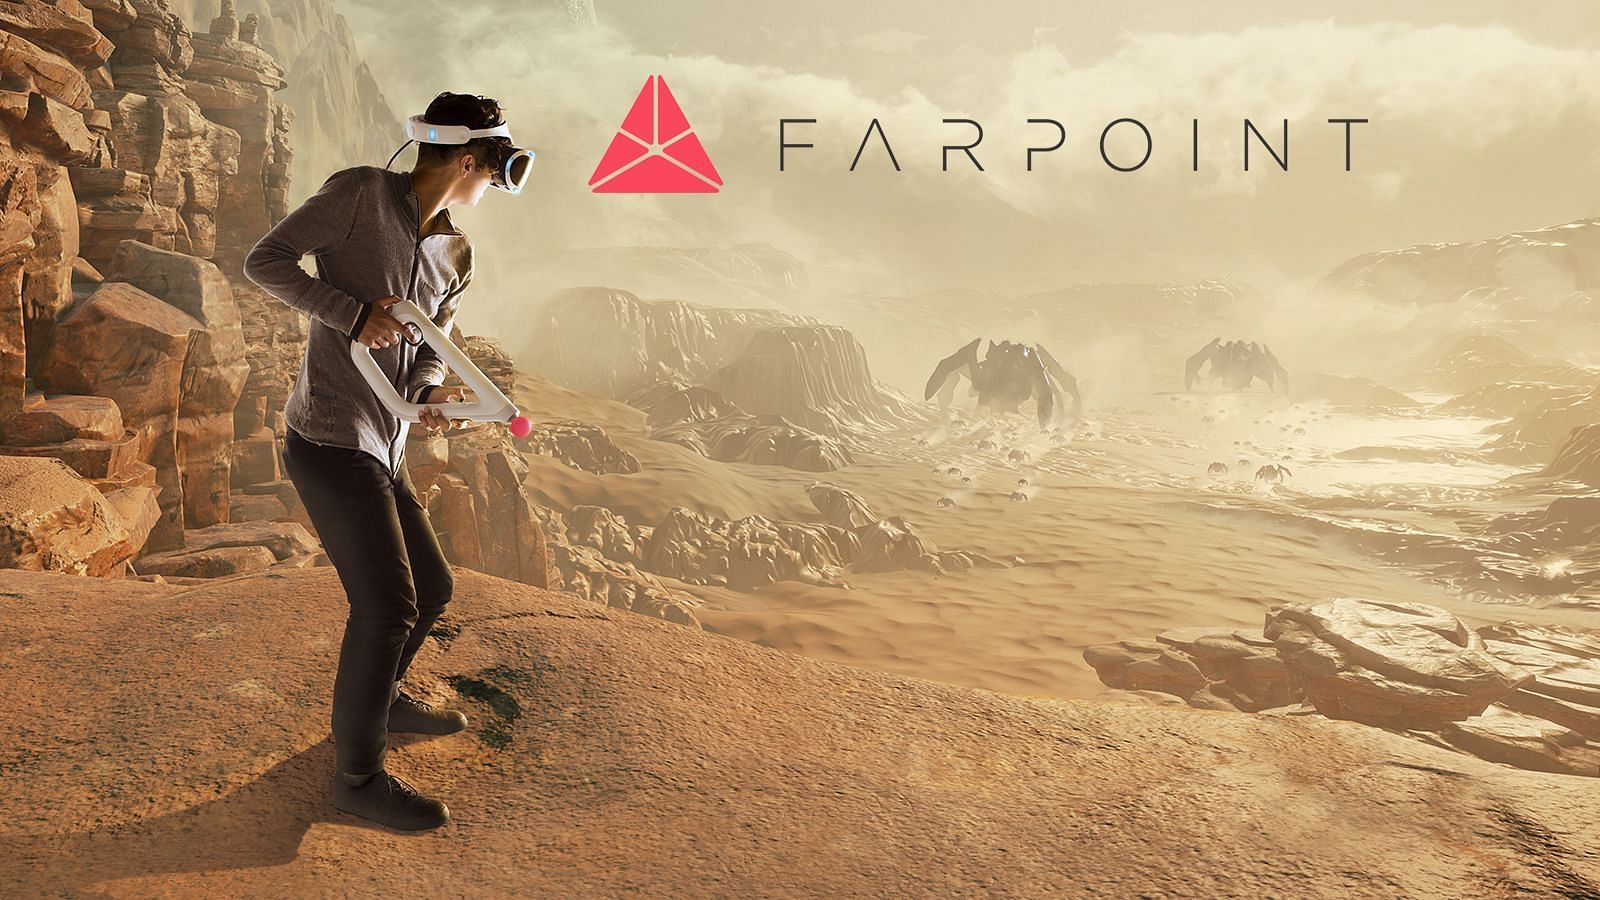 Farpoint (Image via Wallpaper Access)